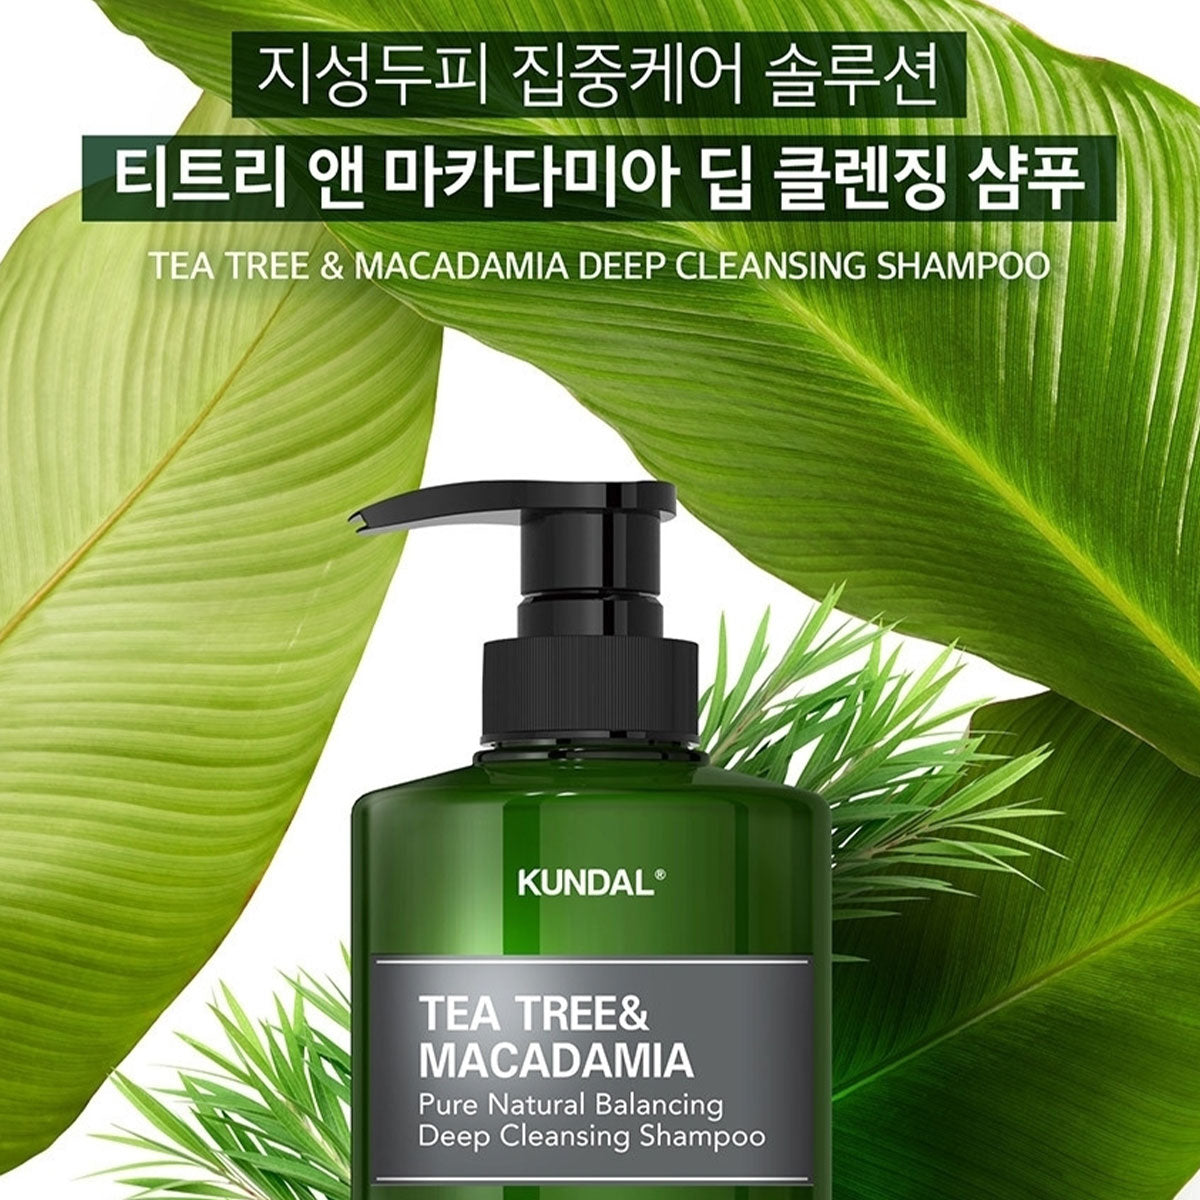 KUNDAL Tea Tree & Macadamia Deep Cleansing Shampoo 500ml(2EA/SET)